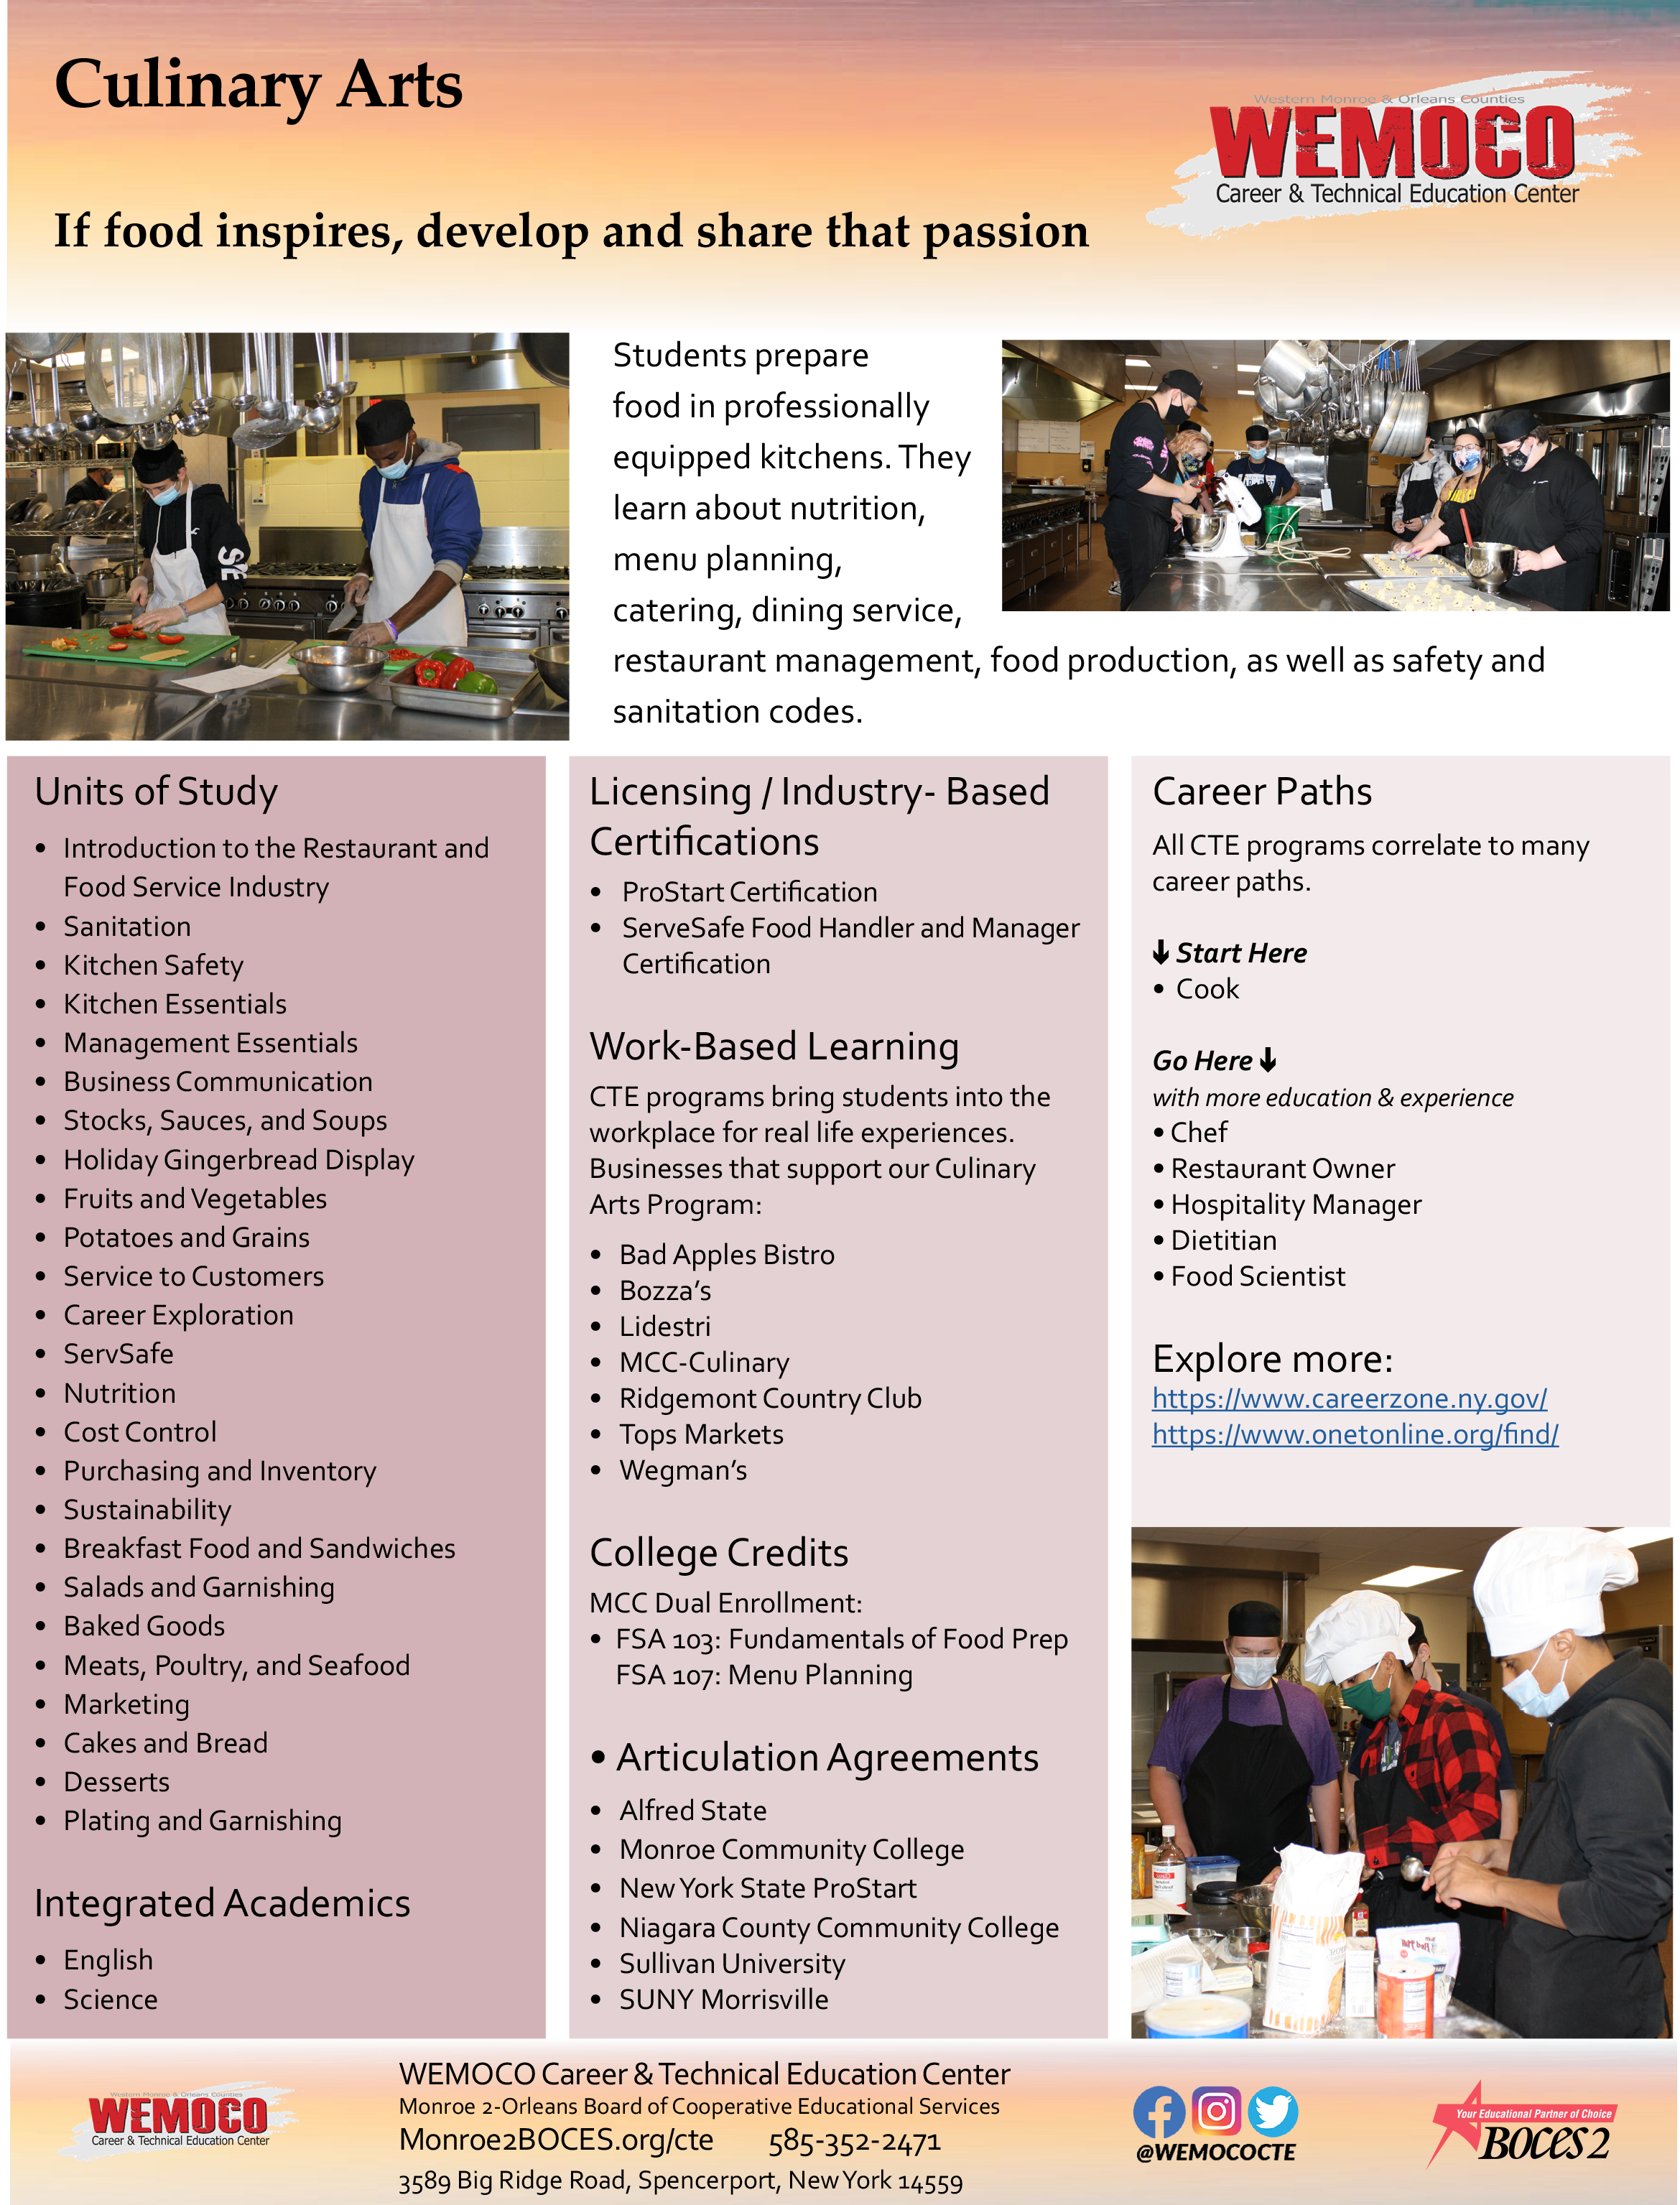 Culinary Arts Program Information